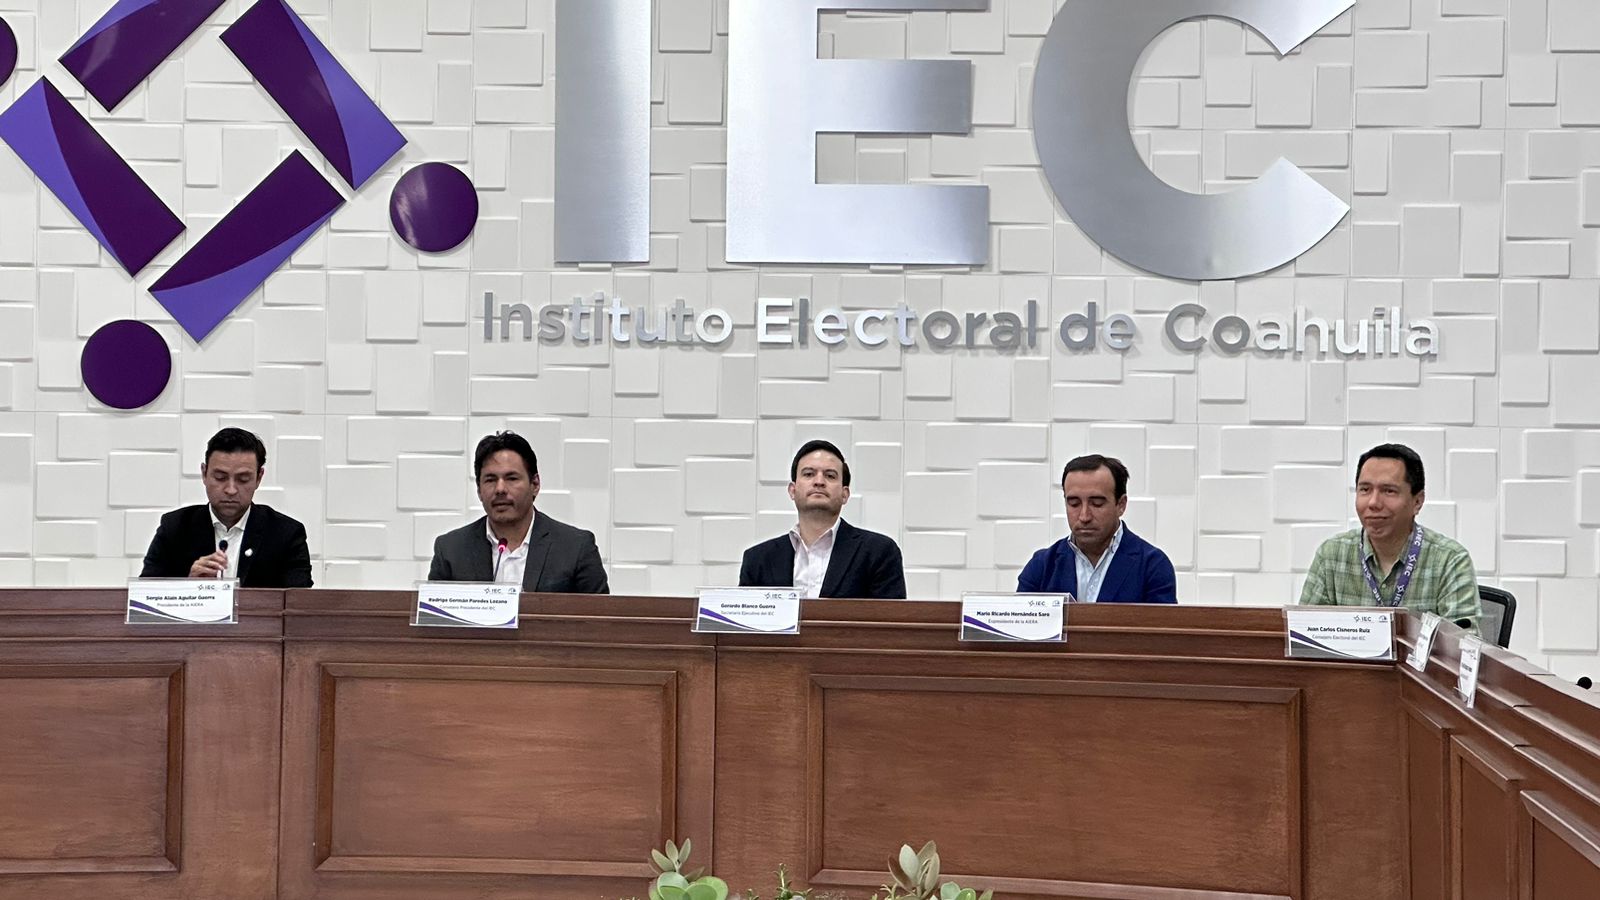 Instituto Electoral de Coahuila (IEC). (PENÉLOPE CUETO)